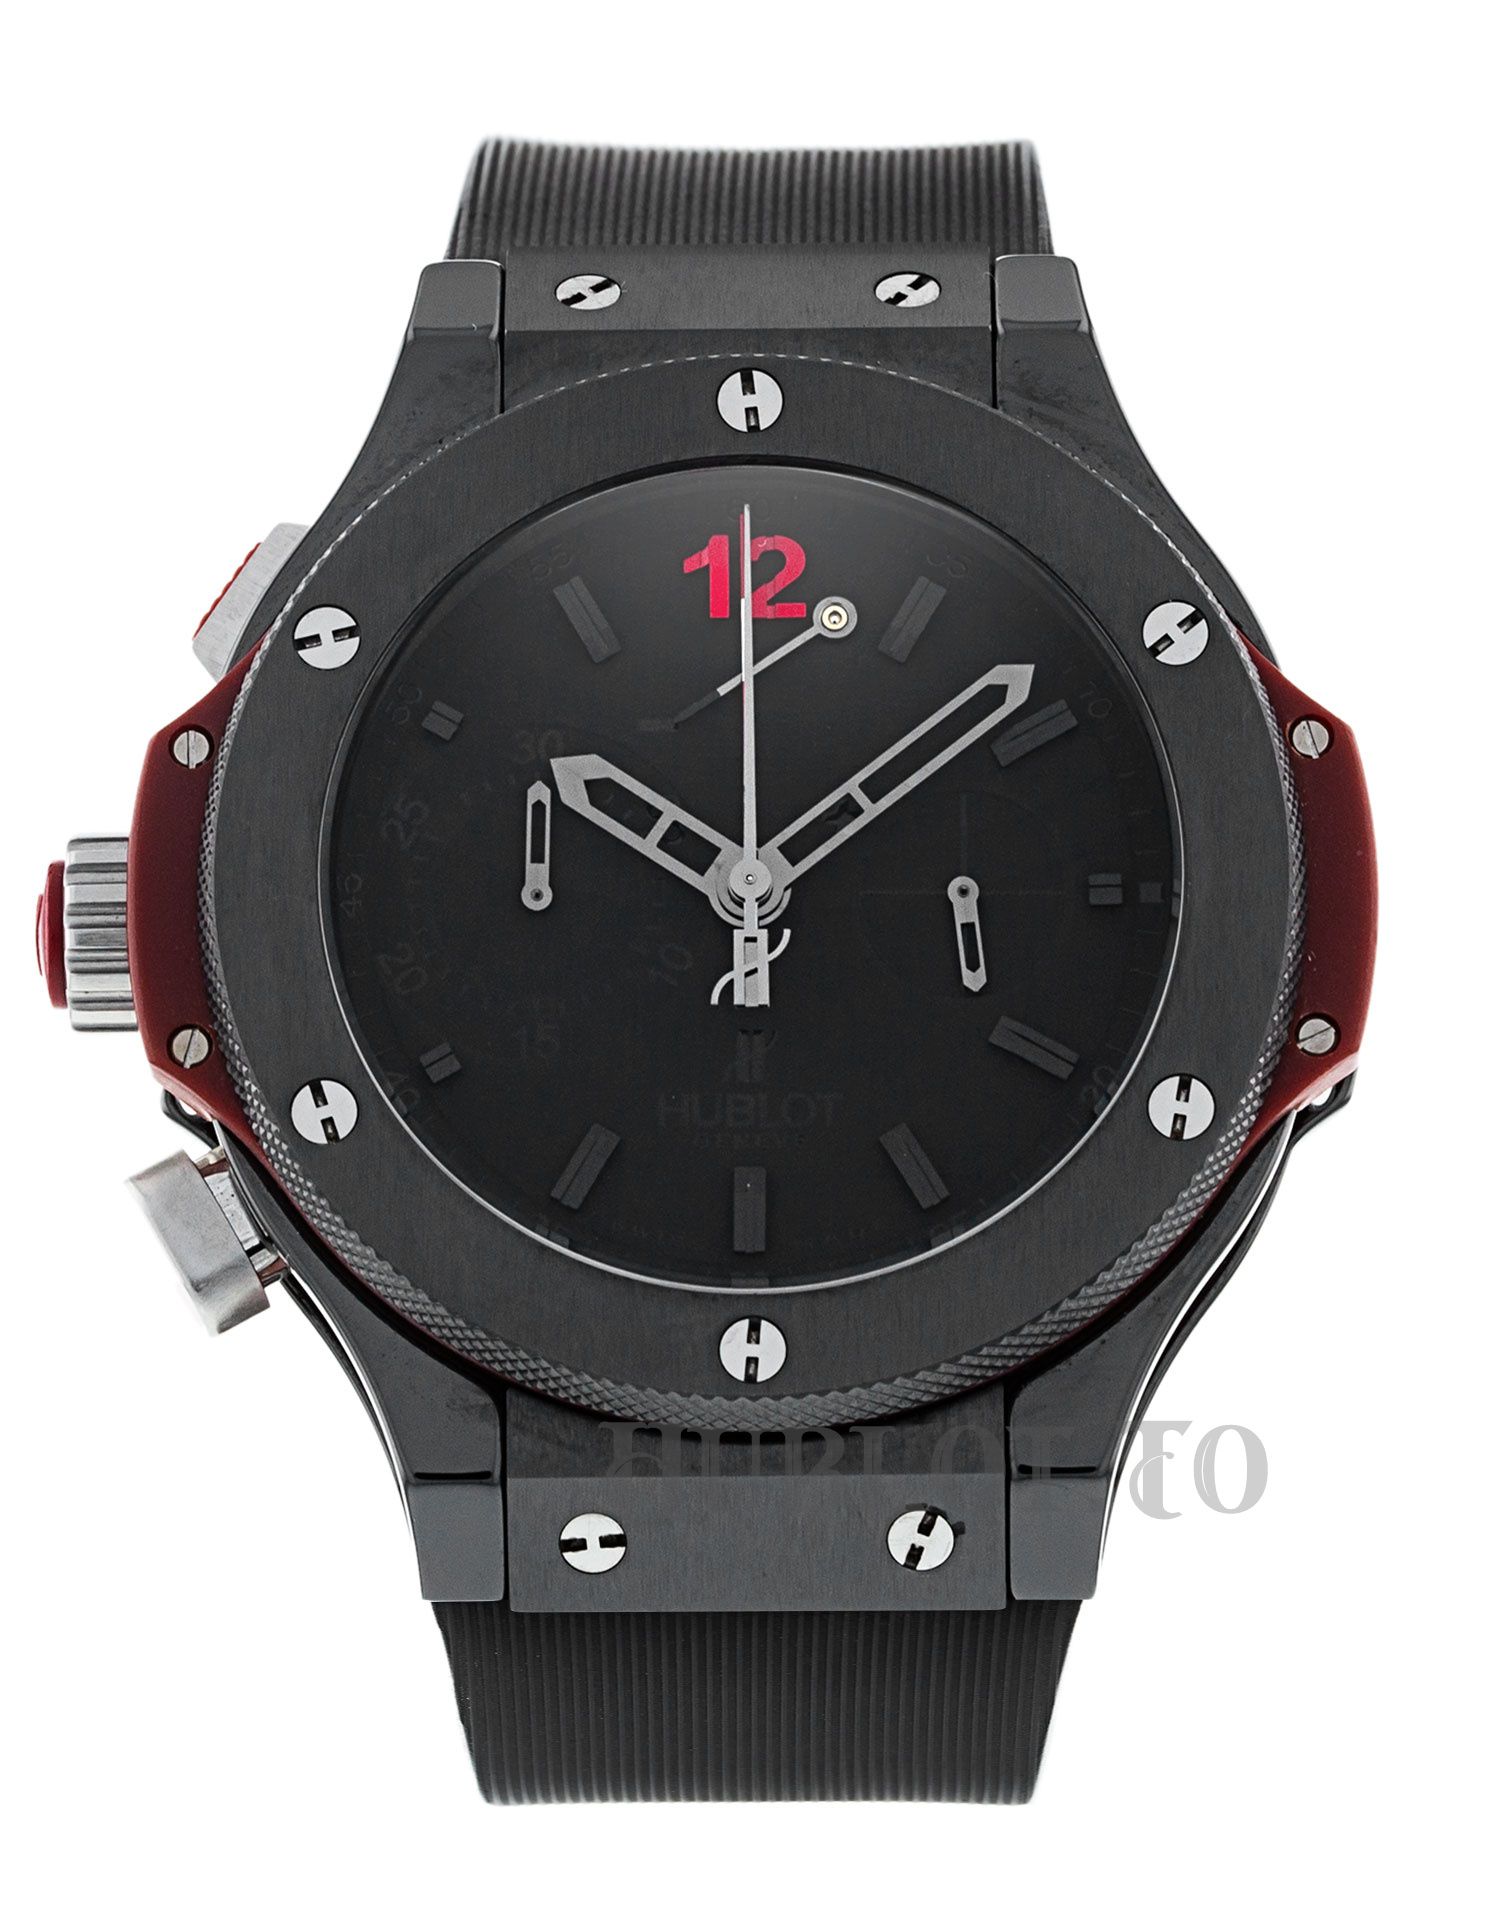 Cartier Panthere Watch Replica